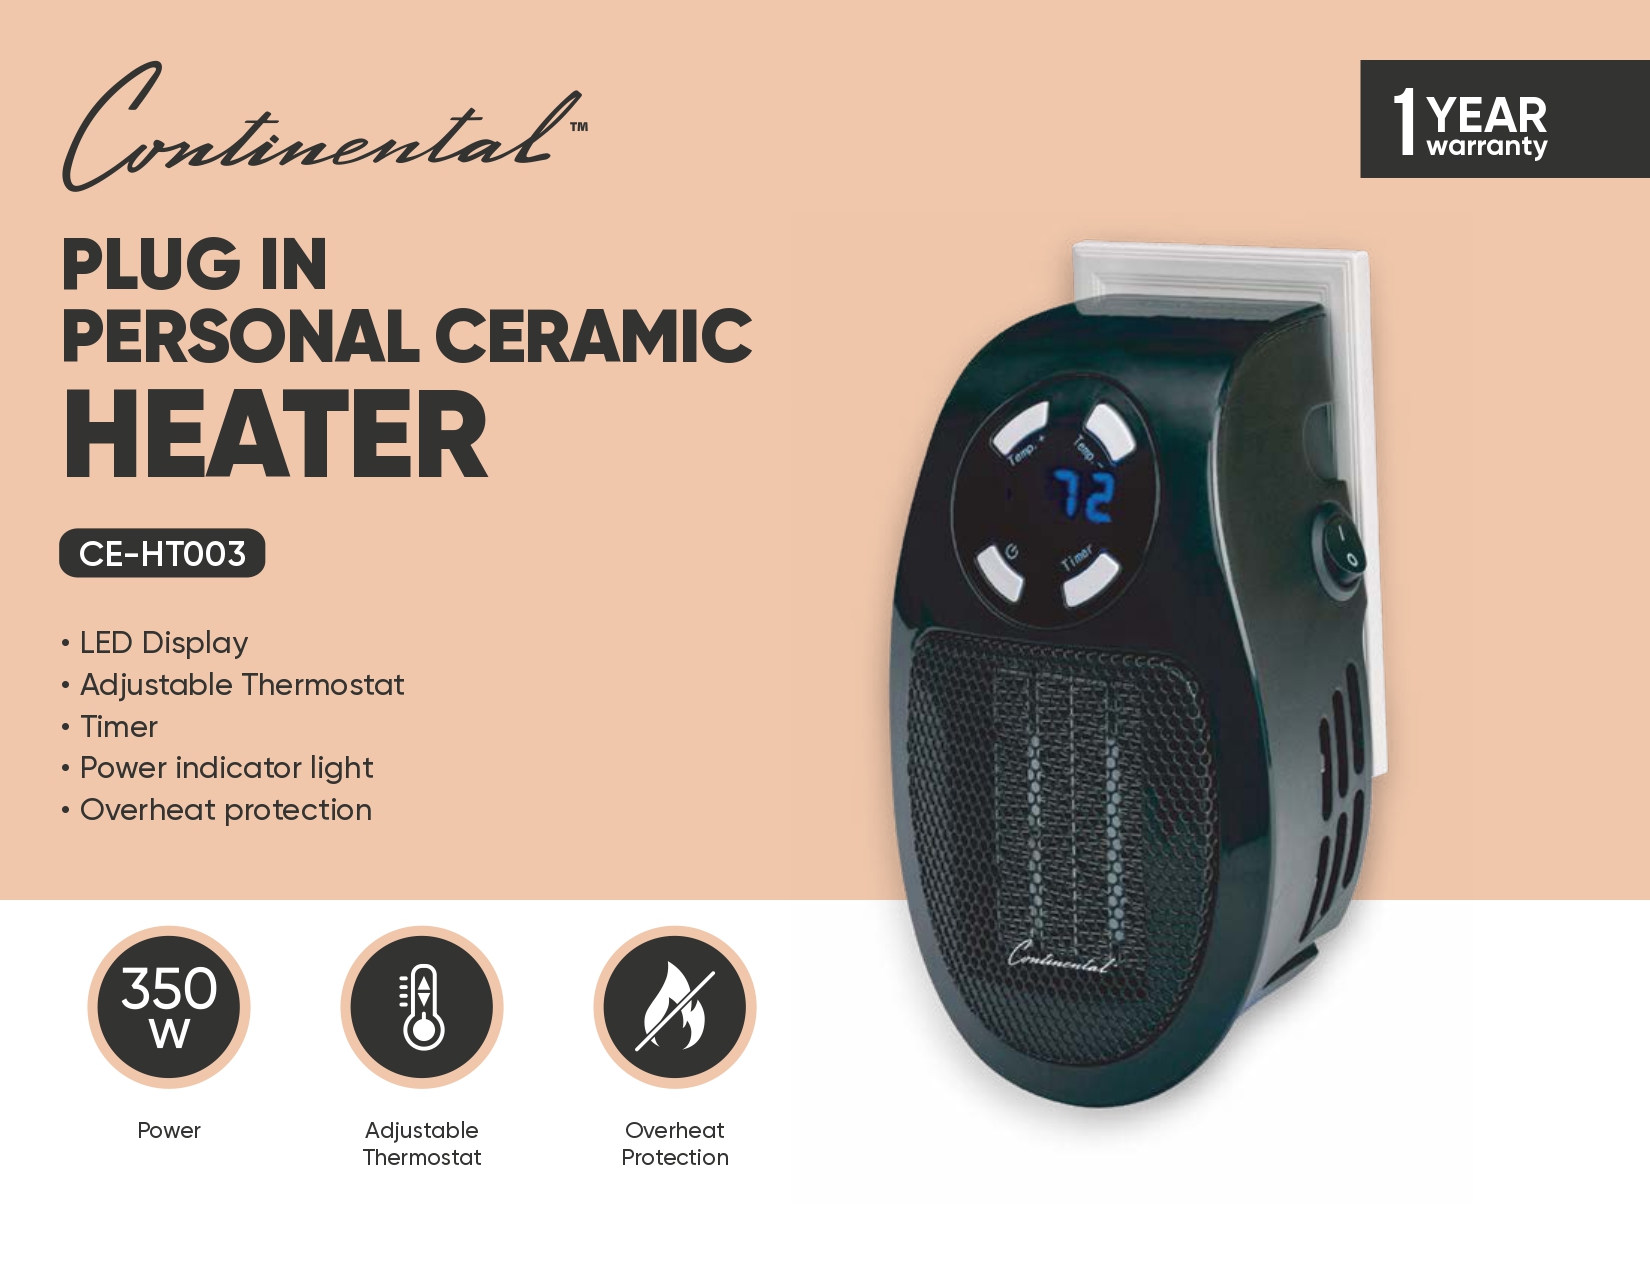 Plug In Personal Ceramic Heater